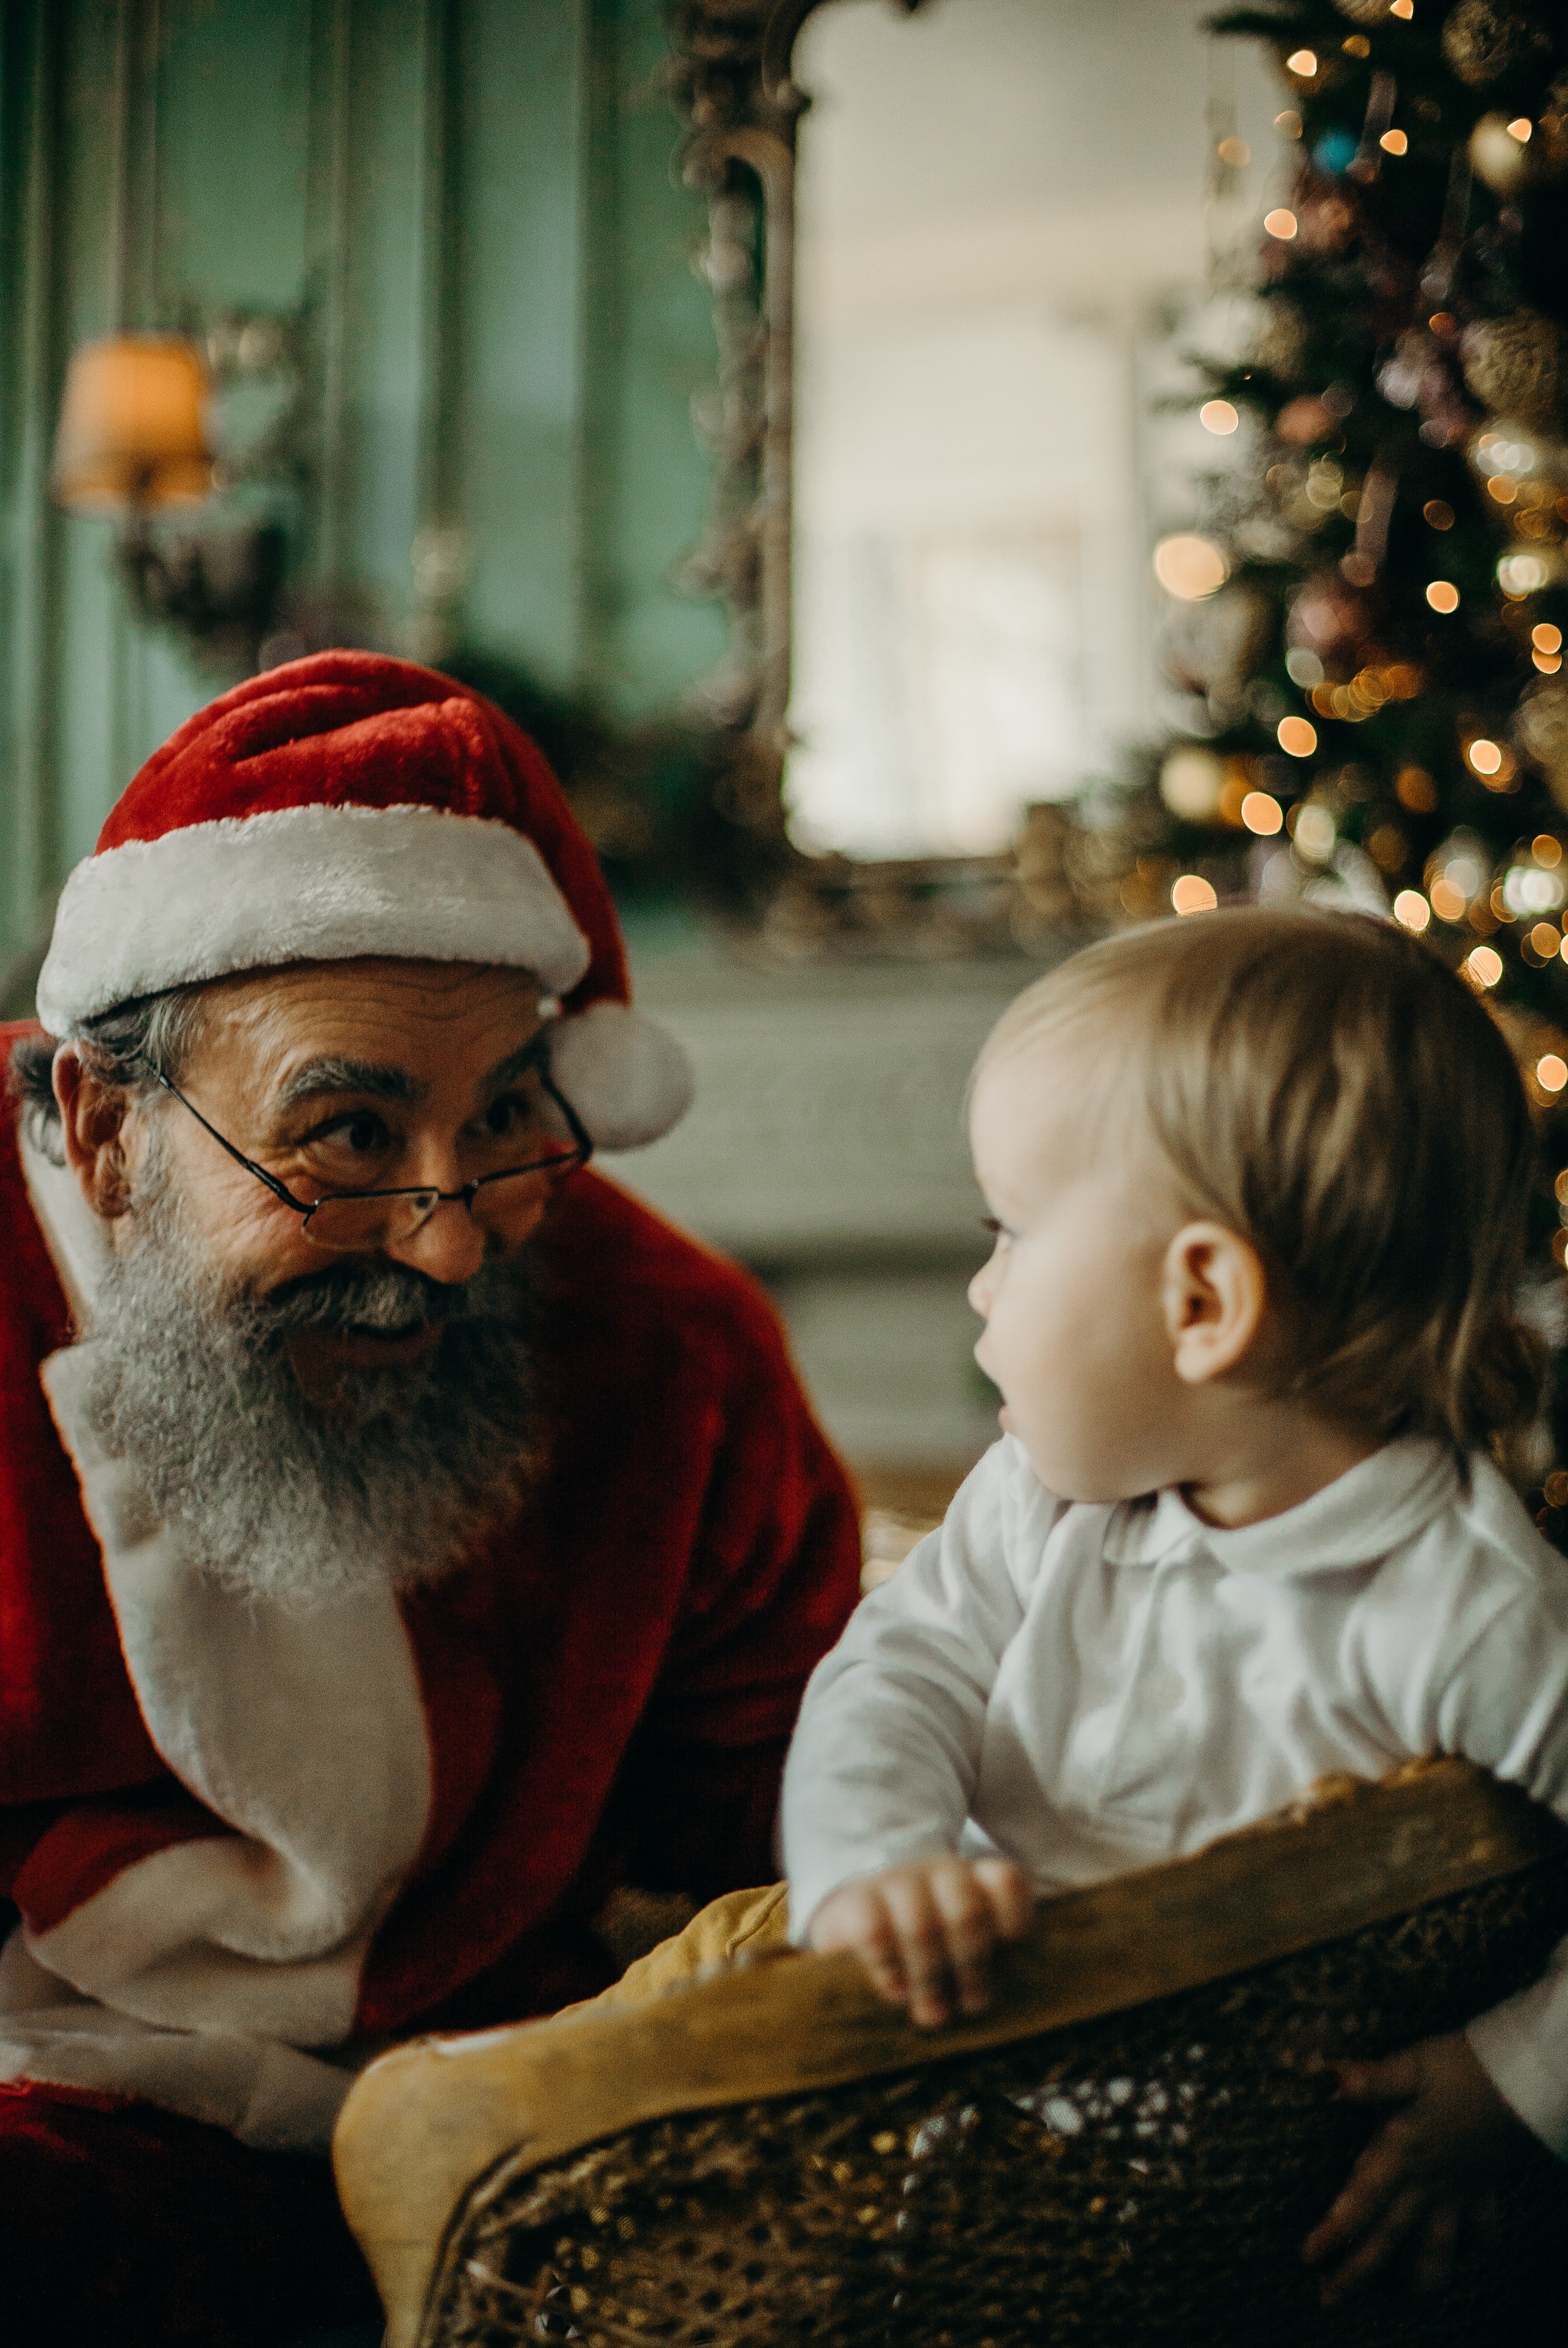 A baby meets a friendly Santa Claus ahead of Christmas. | Source: Pexels.